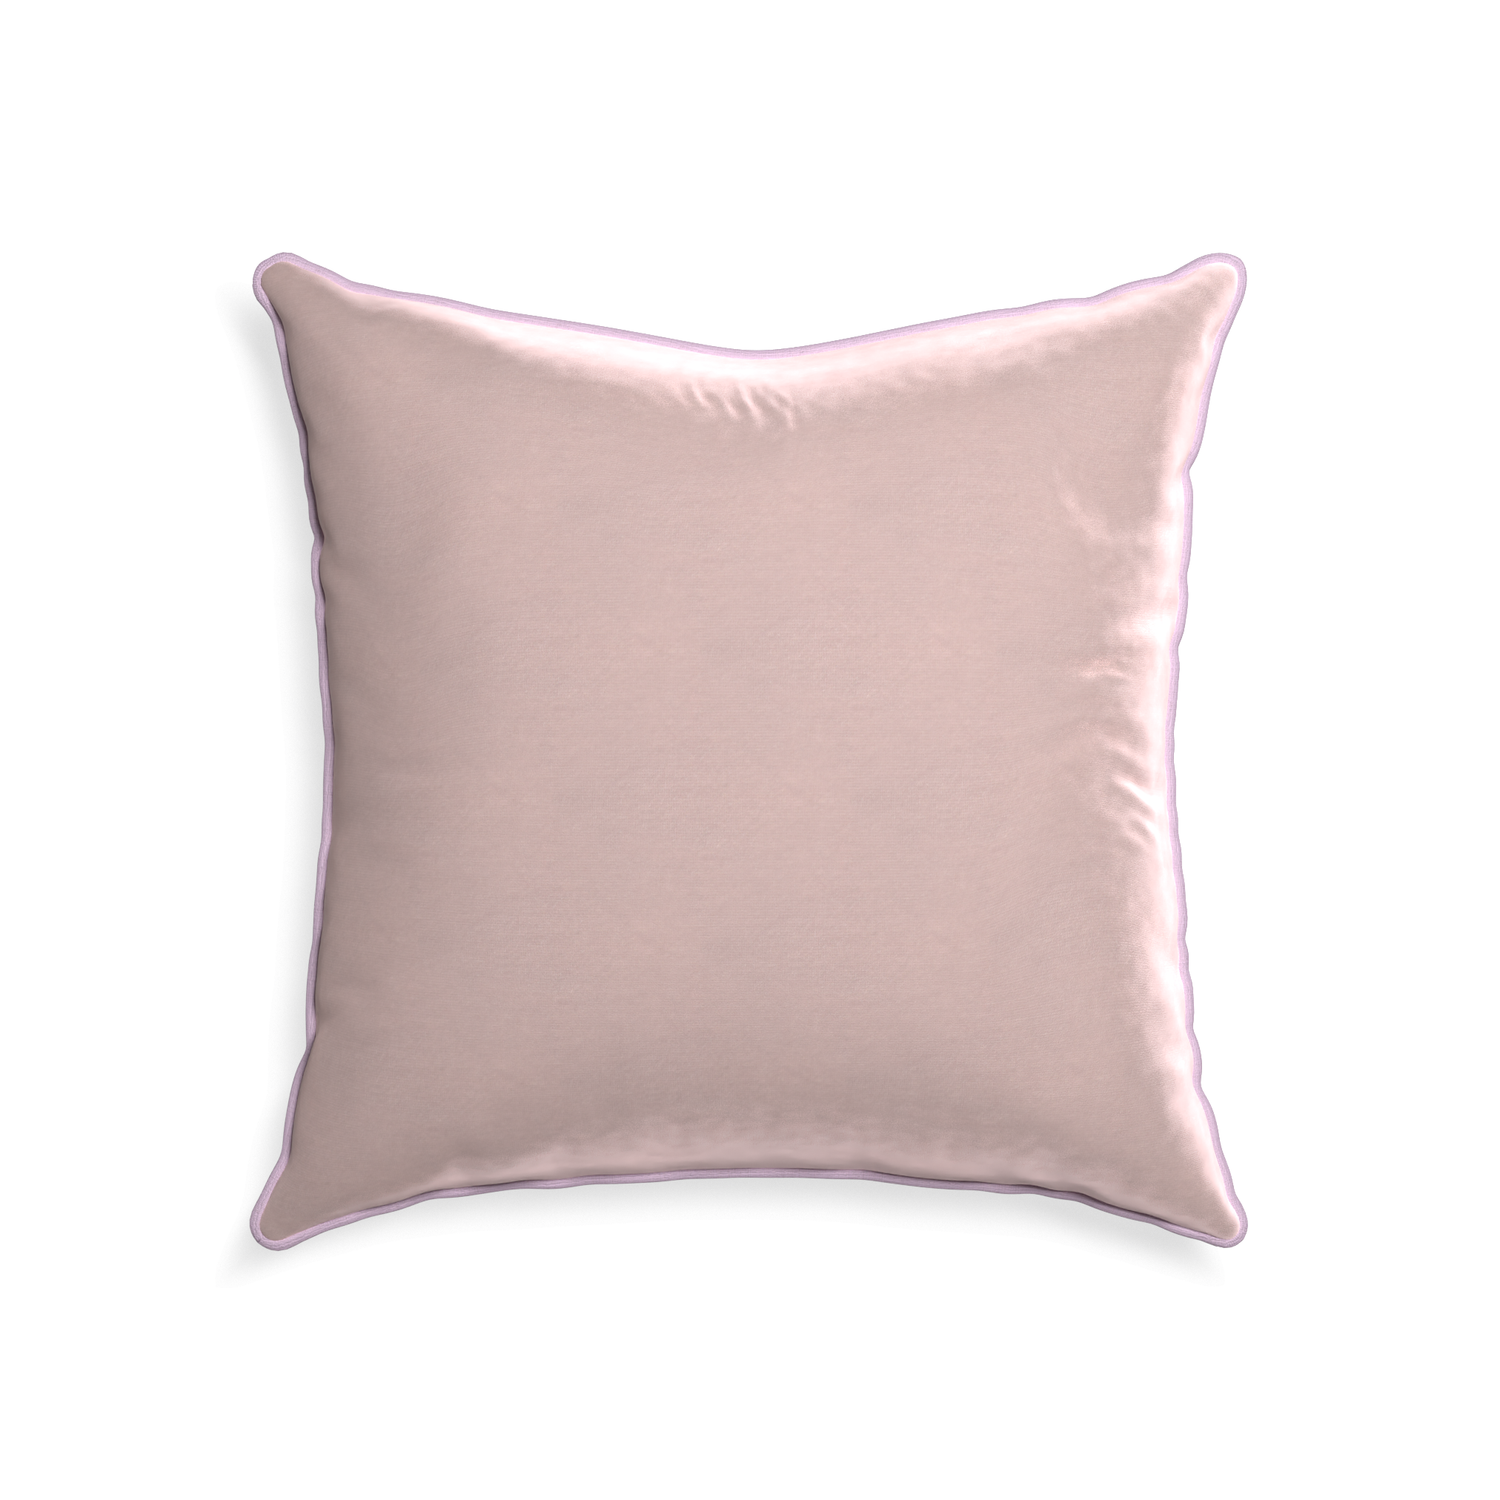 22-square rose velvet custom pillow with l piping on white background